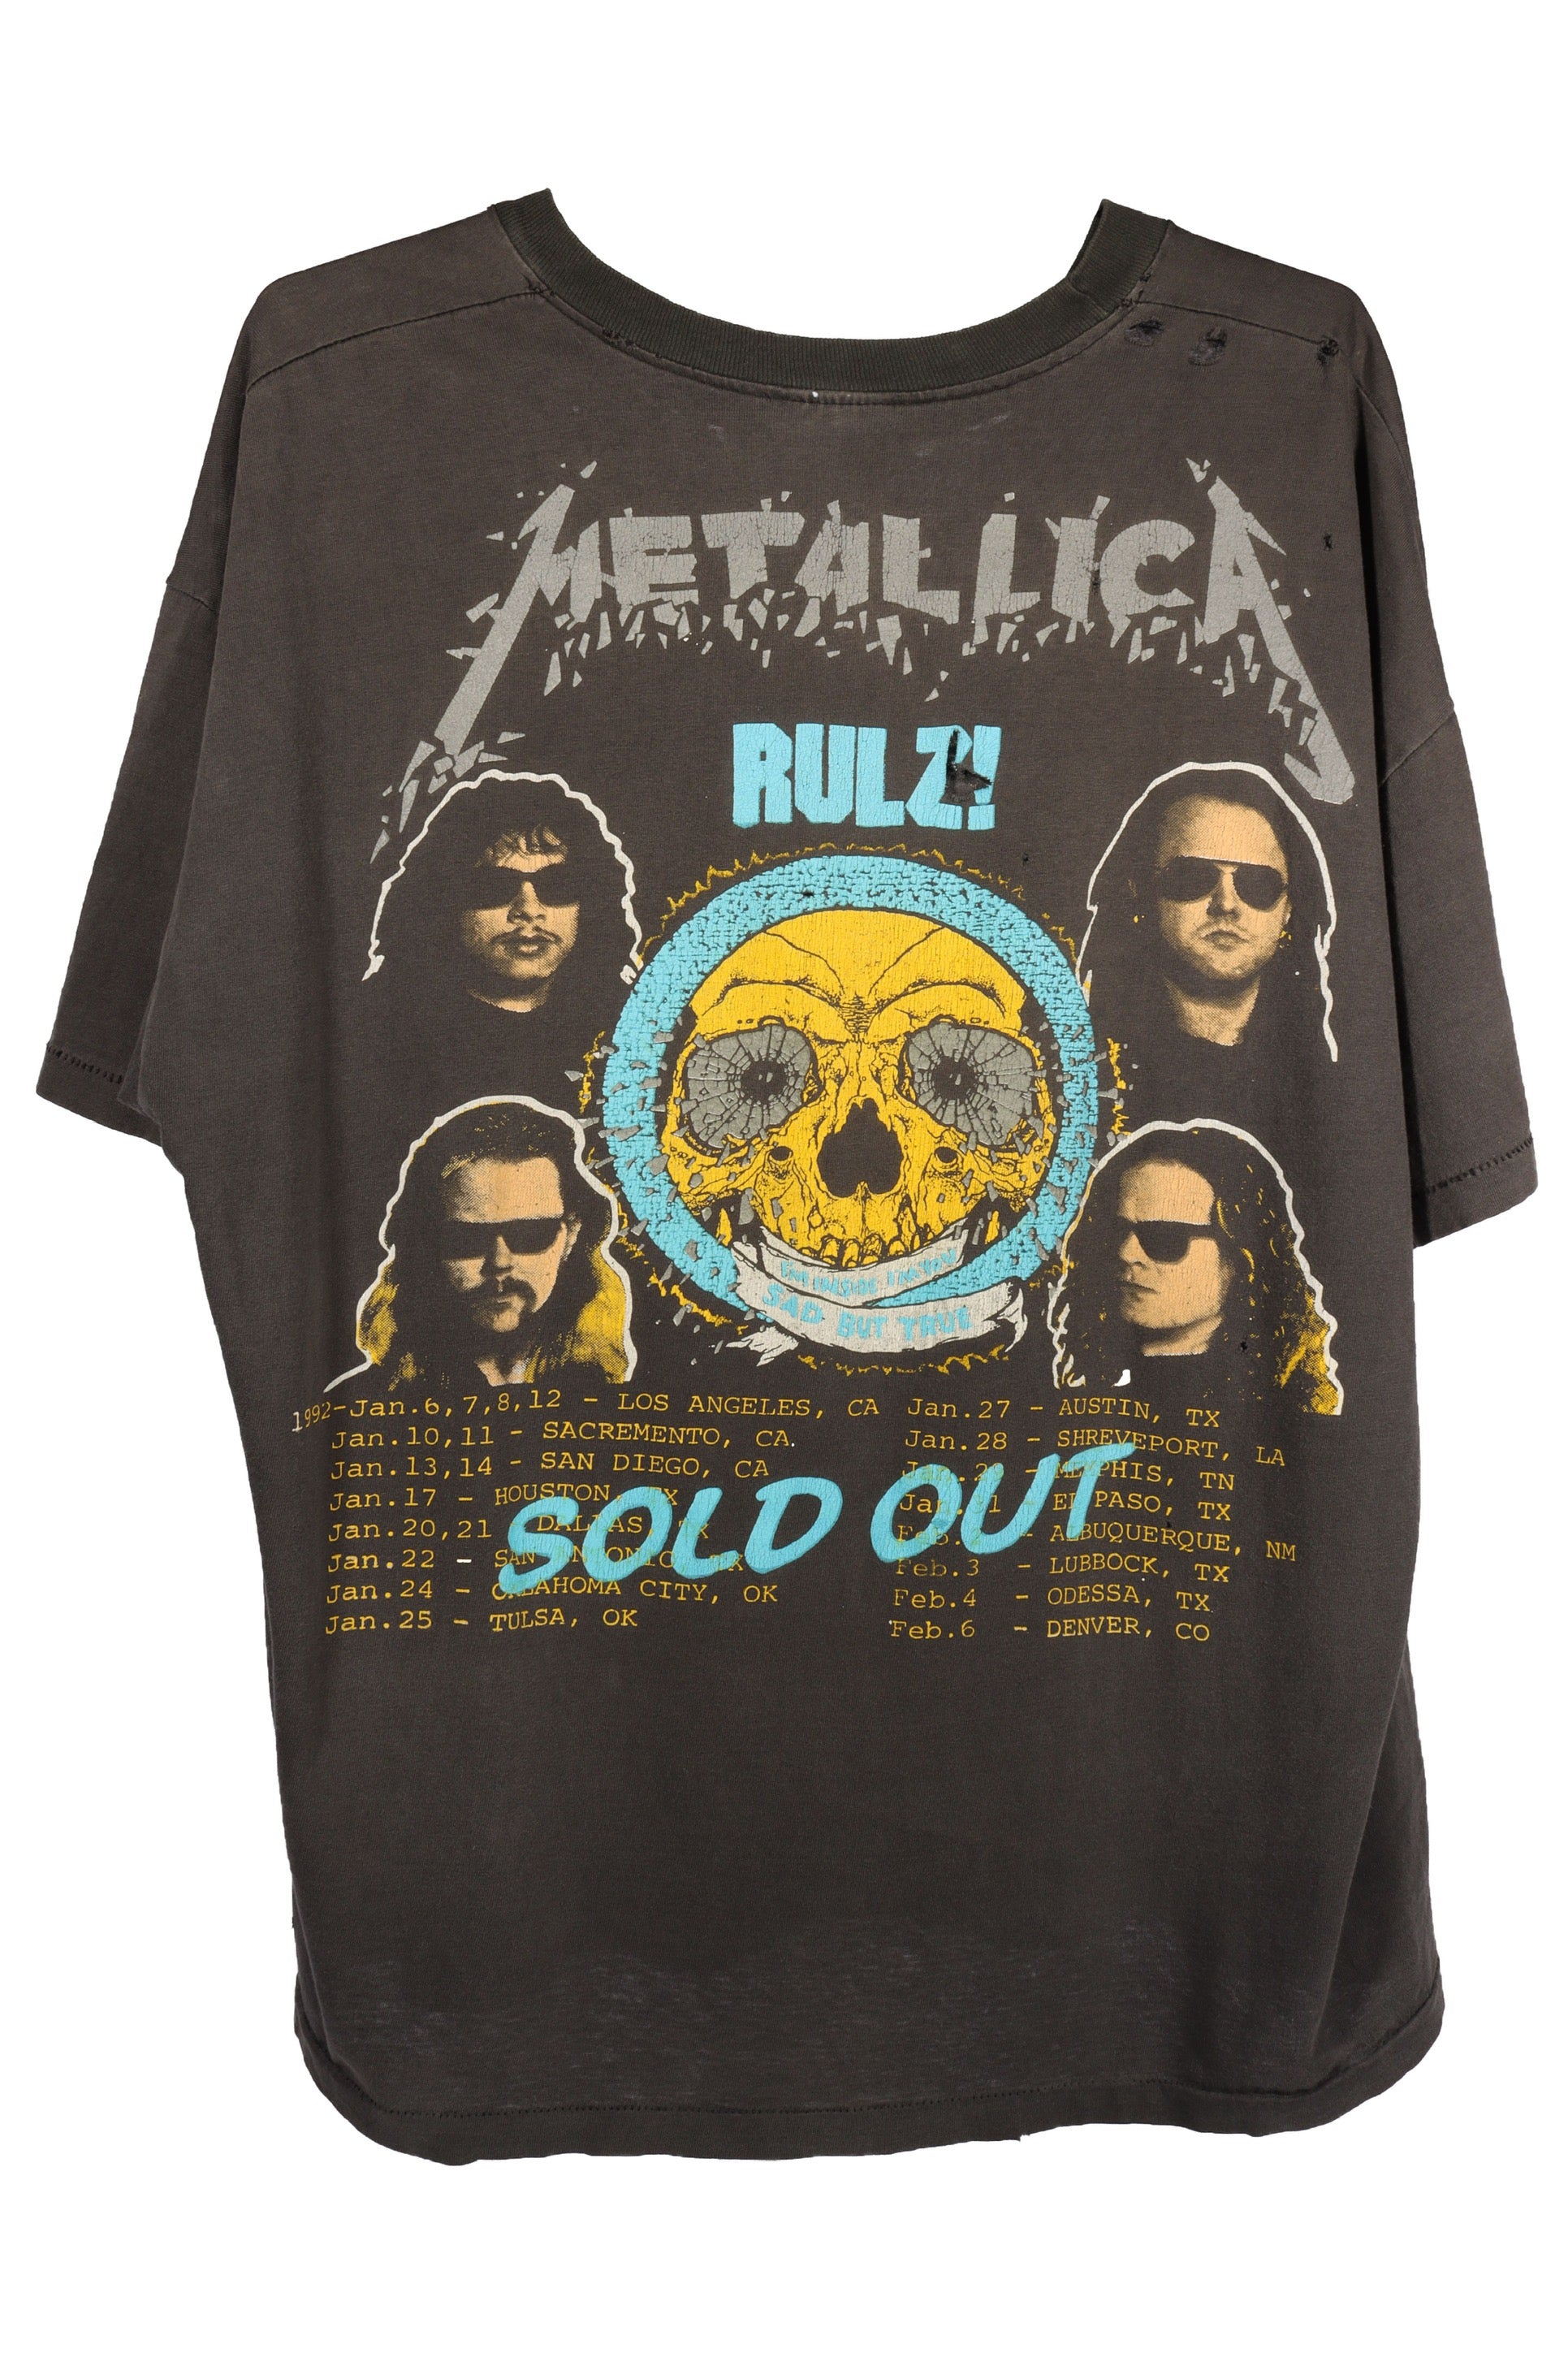 Metallica Rulz 91-92'